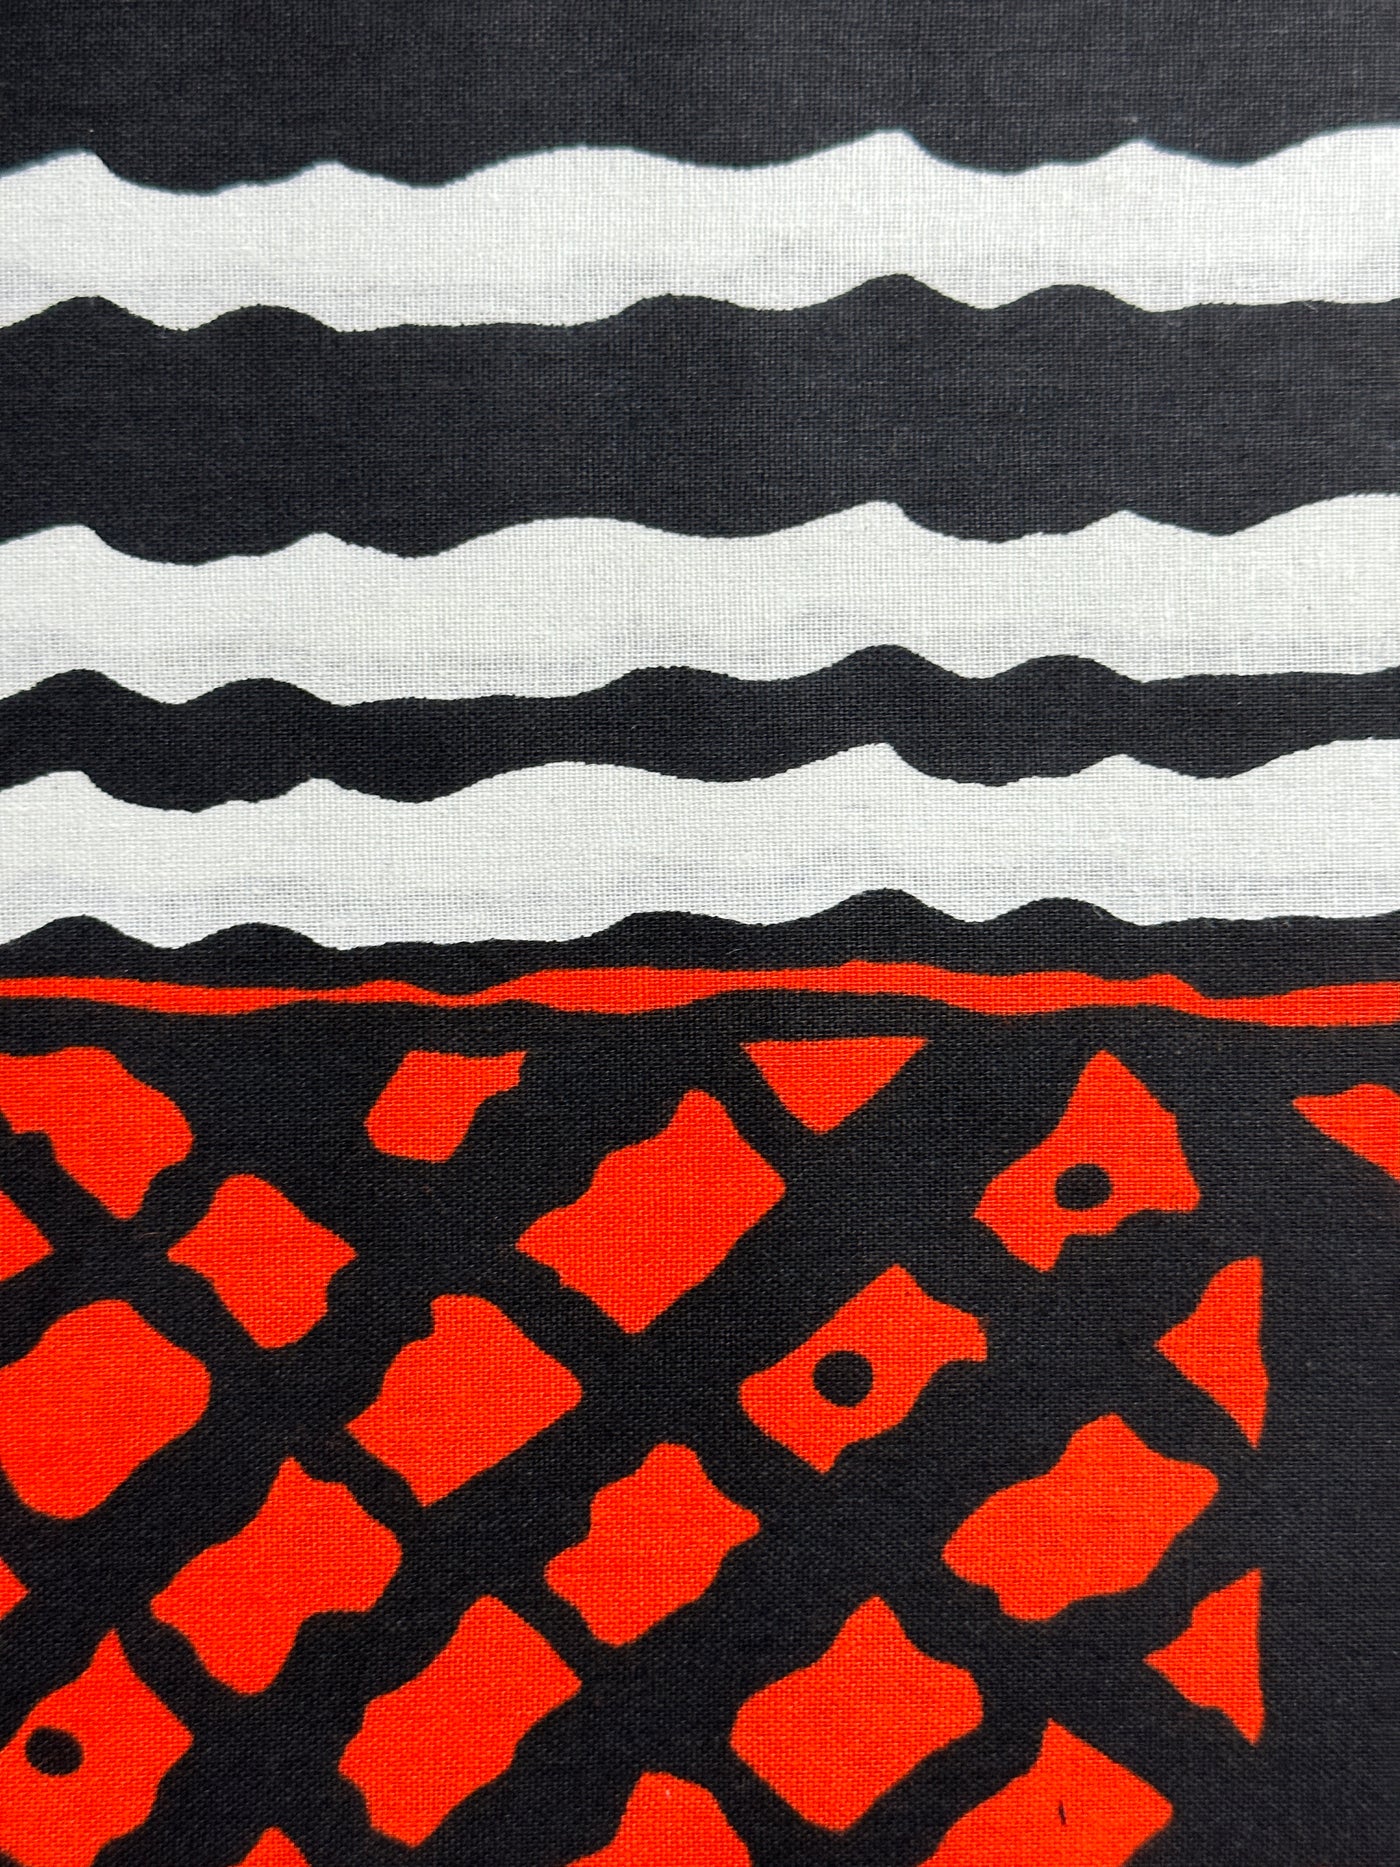 Tribal Fabric - TBMXYO